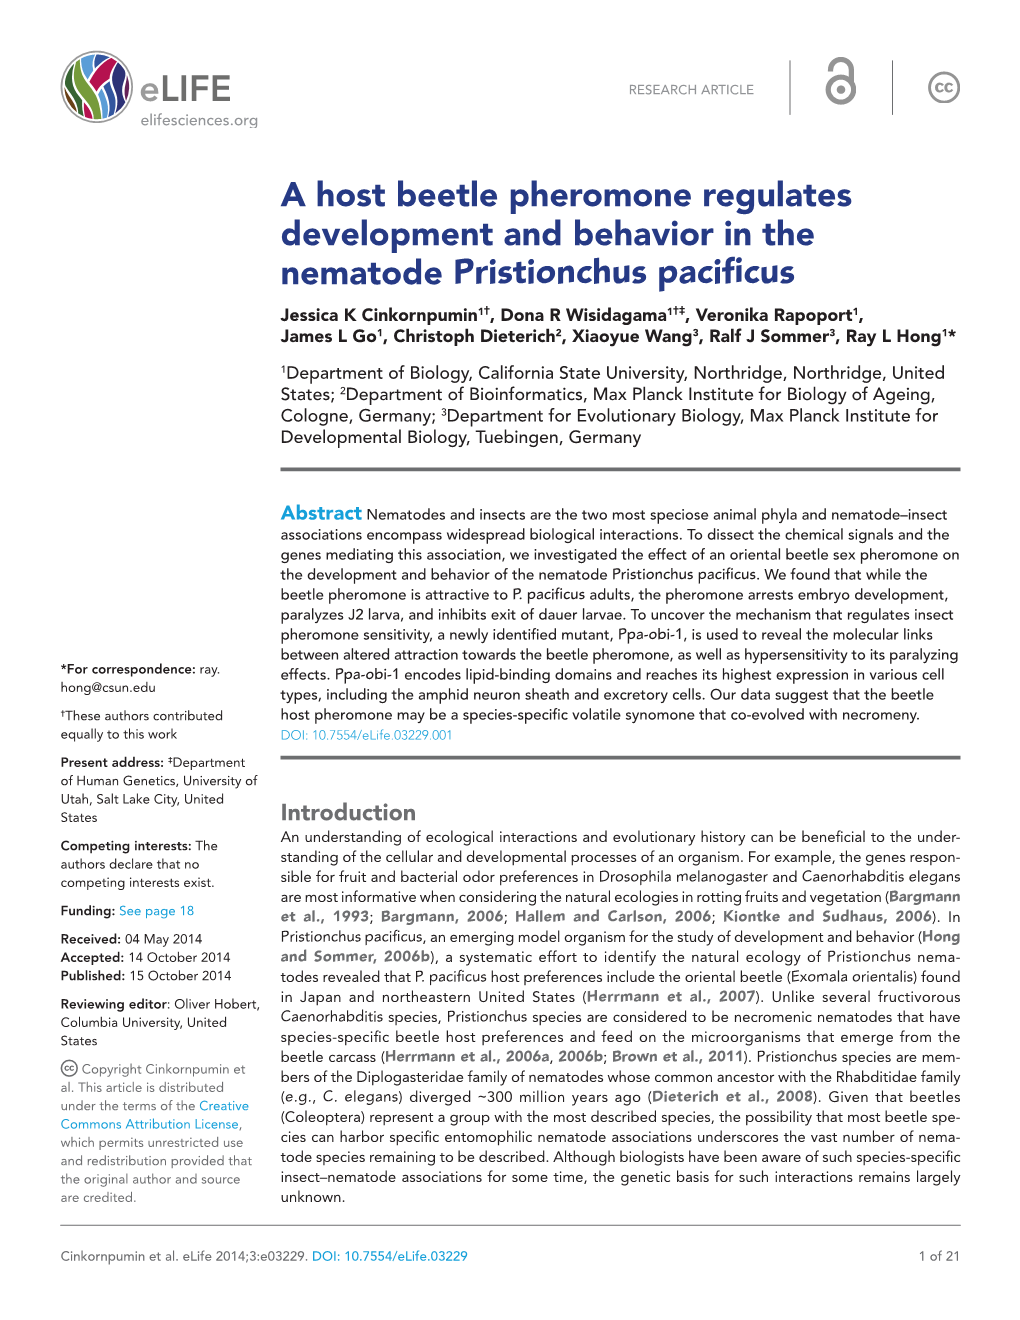 A Host Beetle Pheromone Regulates Development and Behavior